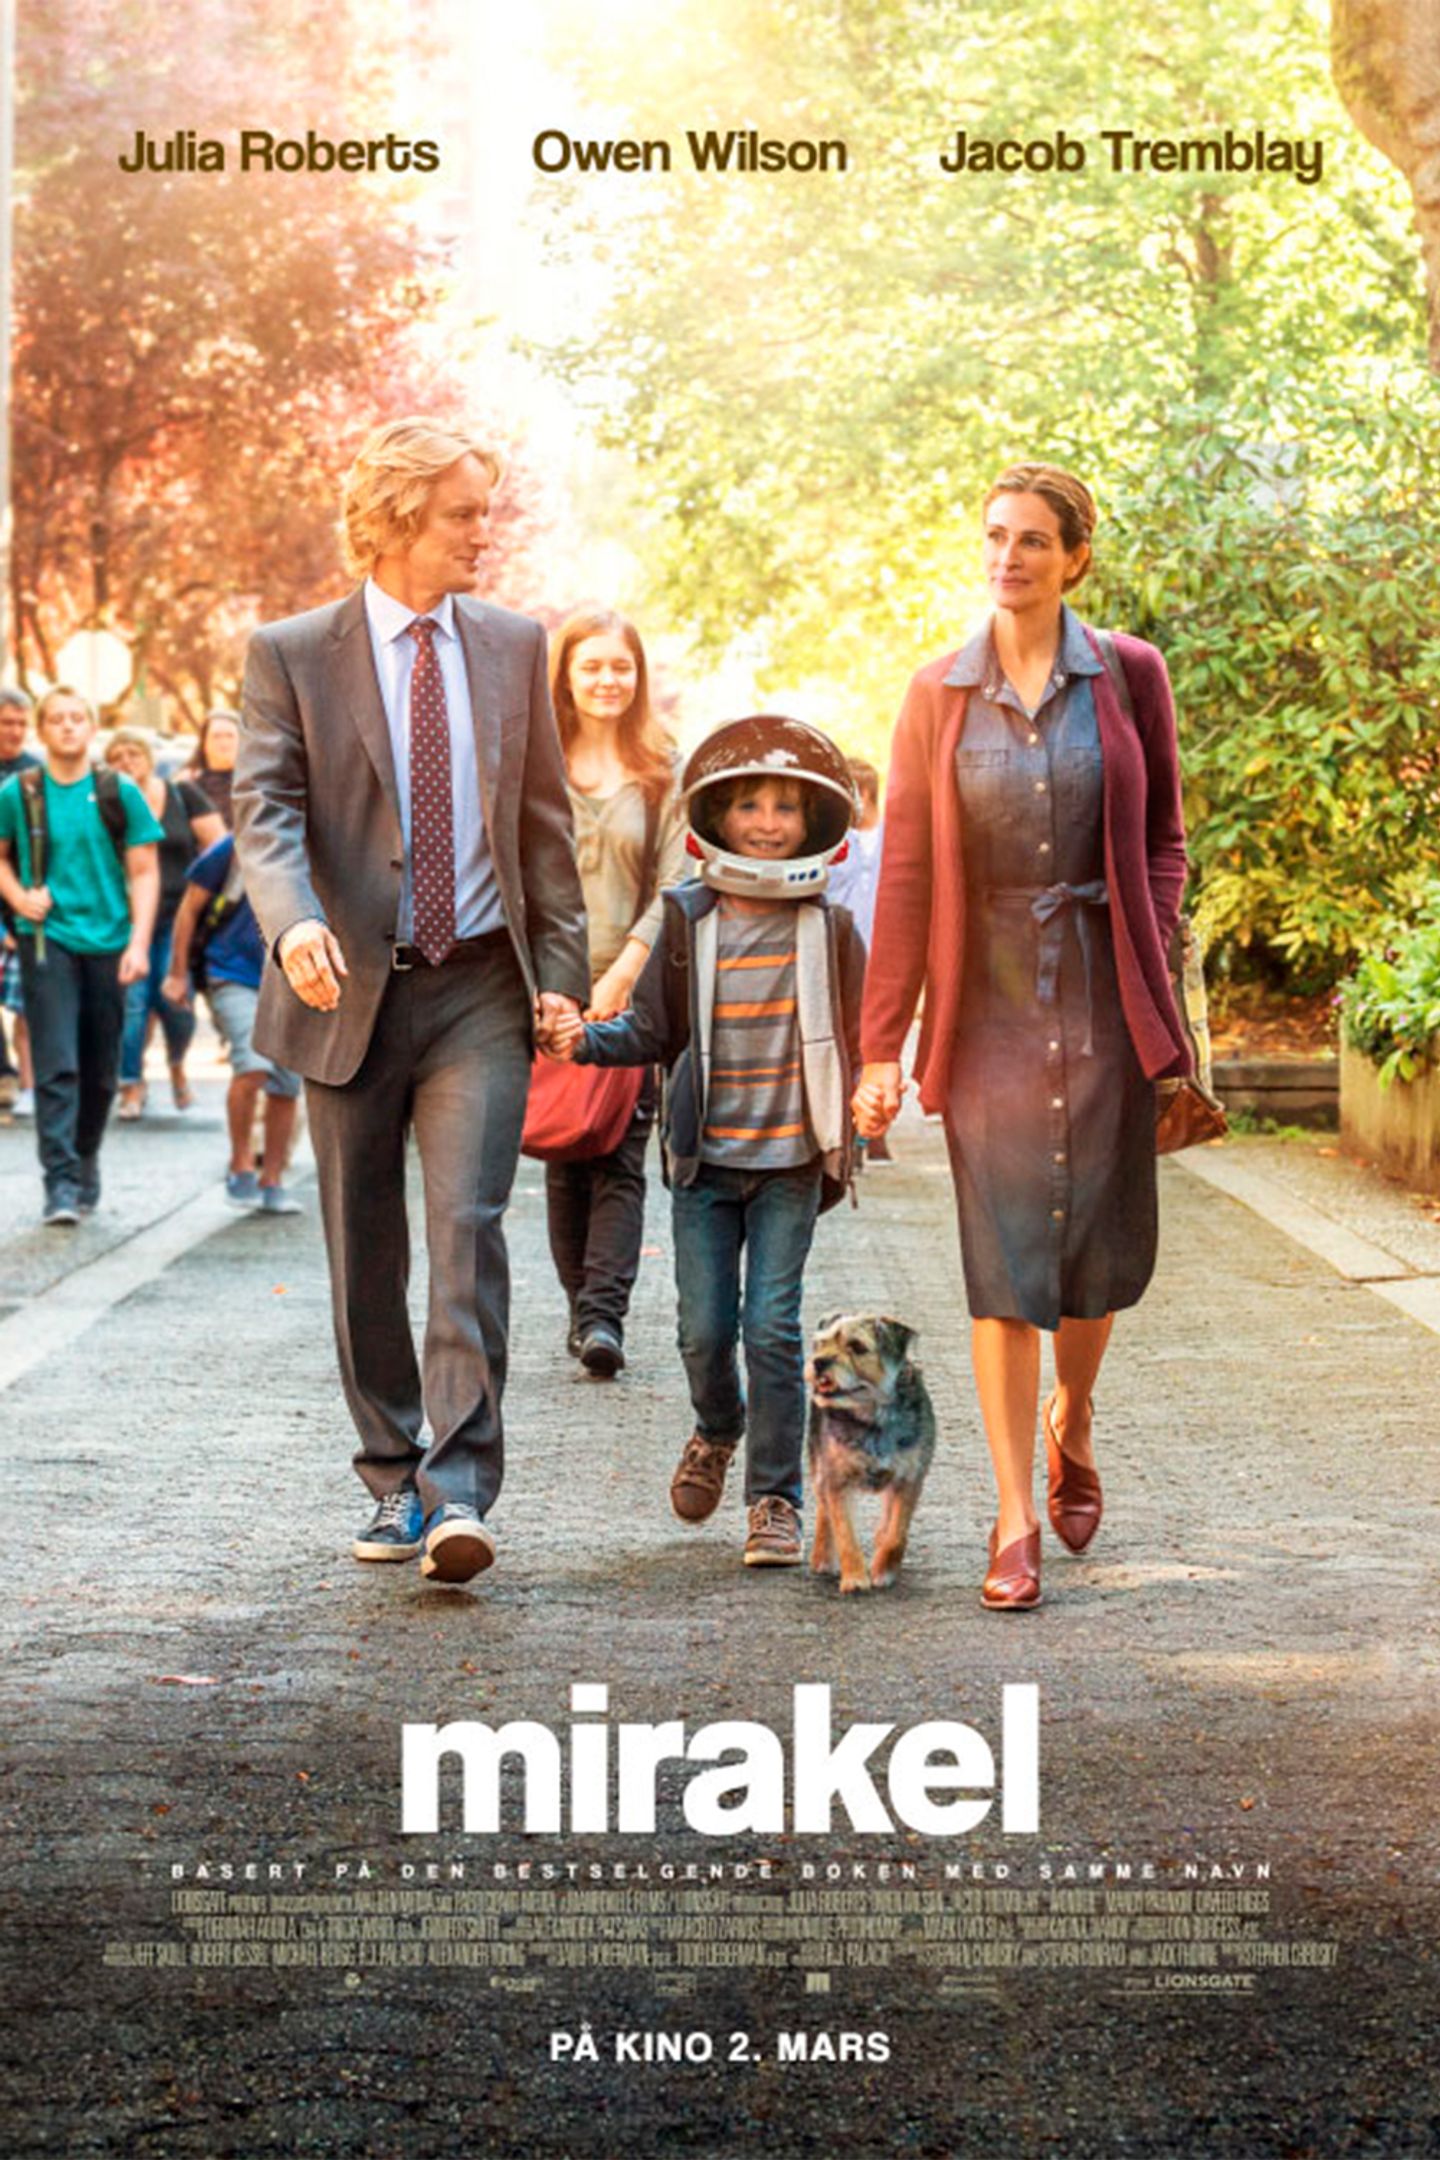 Plakat for 'Mirakel (Wonder)'